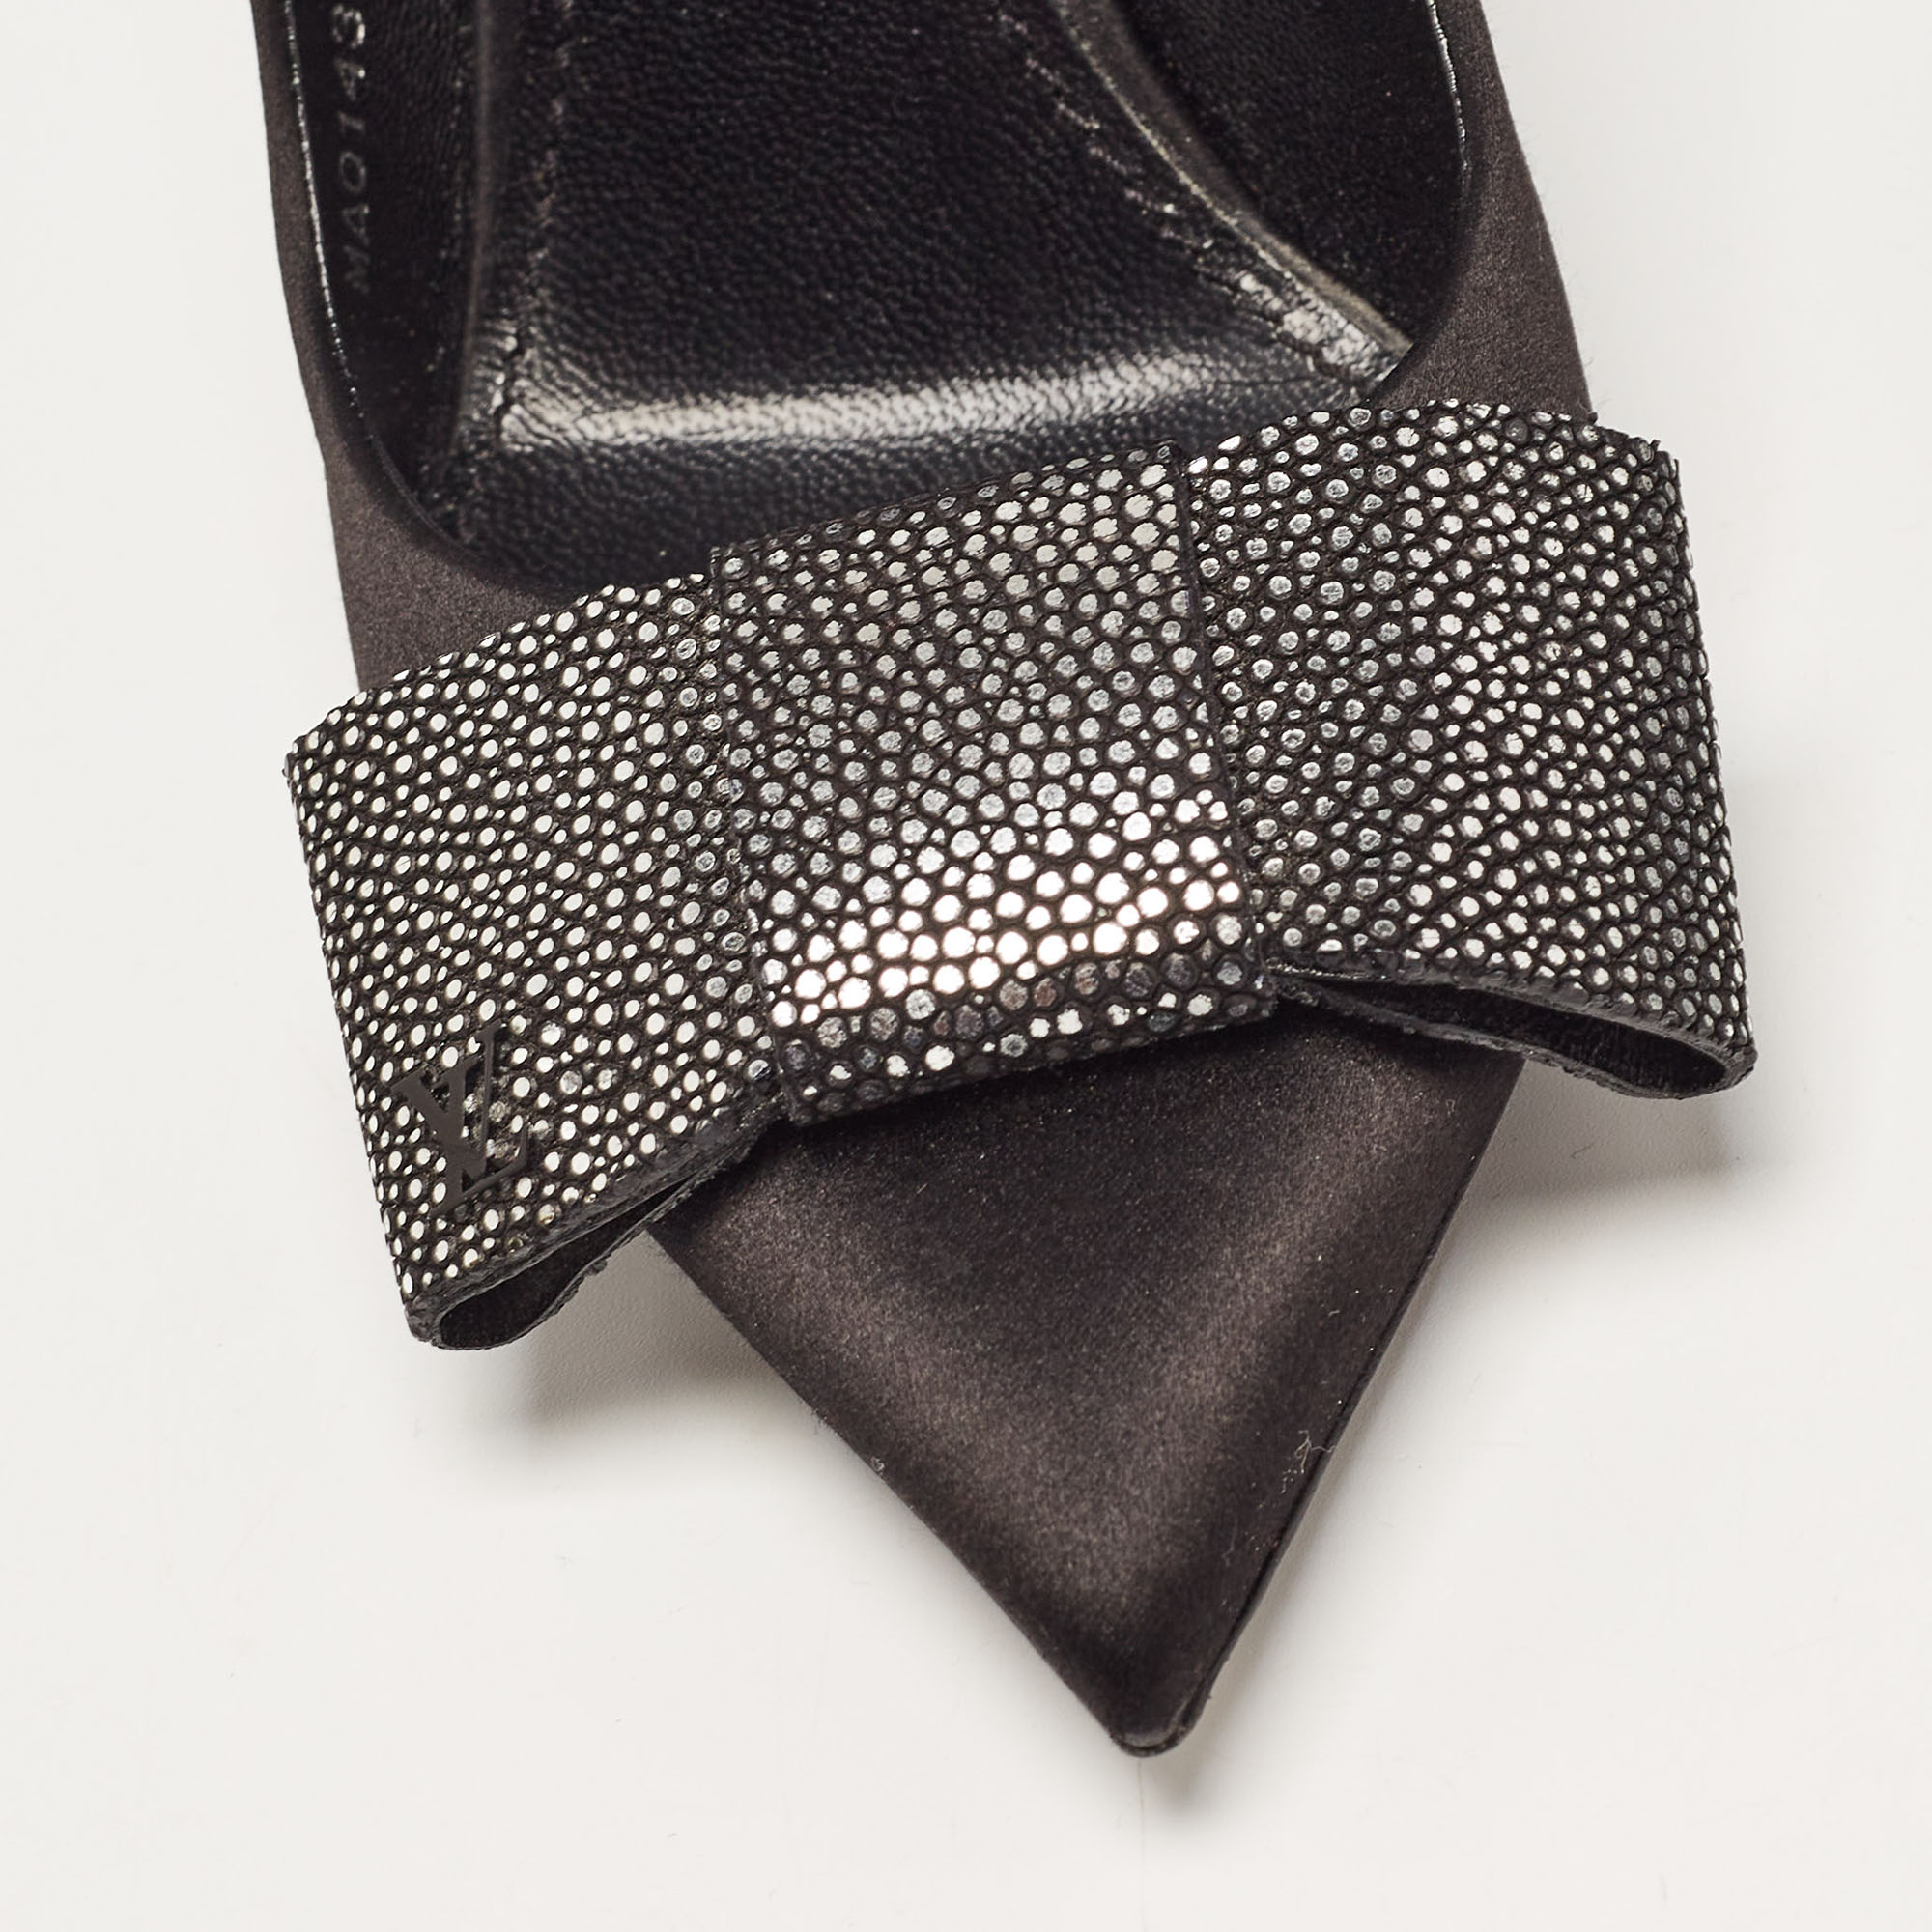 Louis Vuitton Black Satin Bow Pointed Toe Pumps Size 36.5